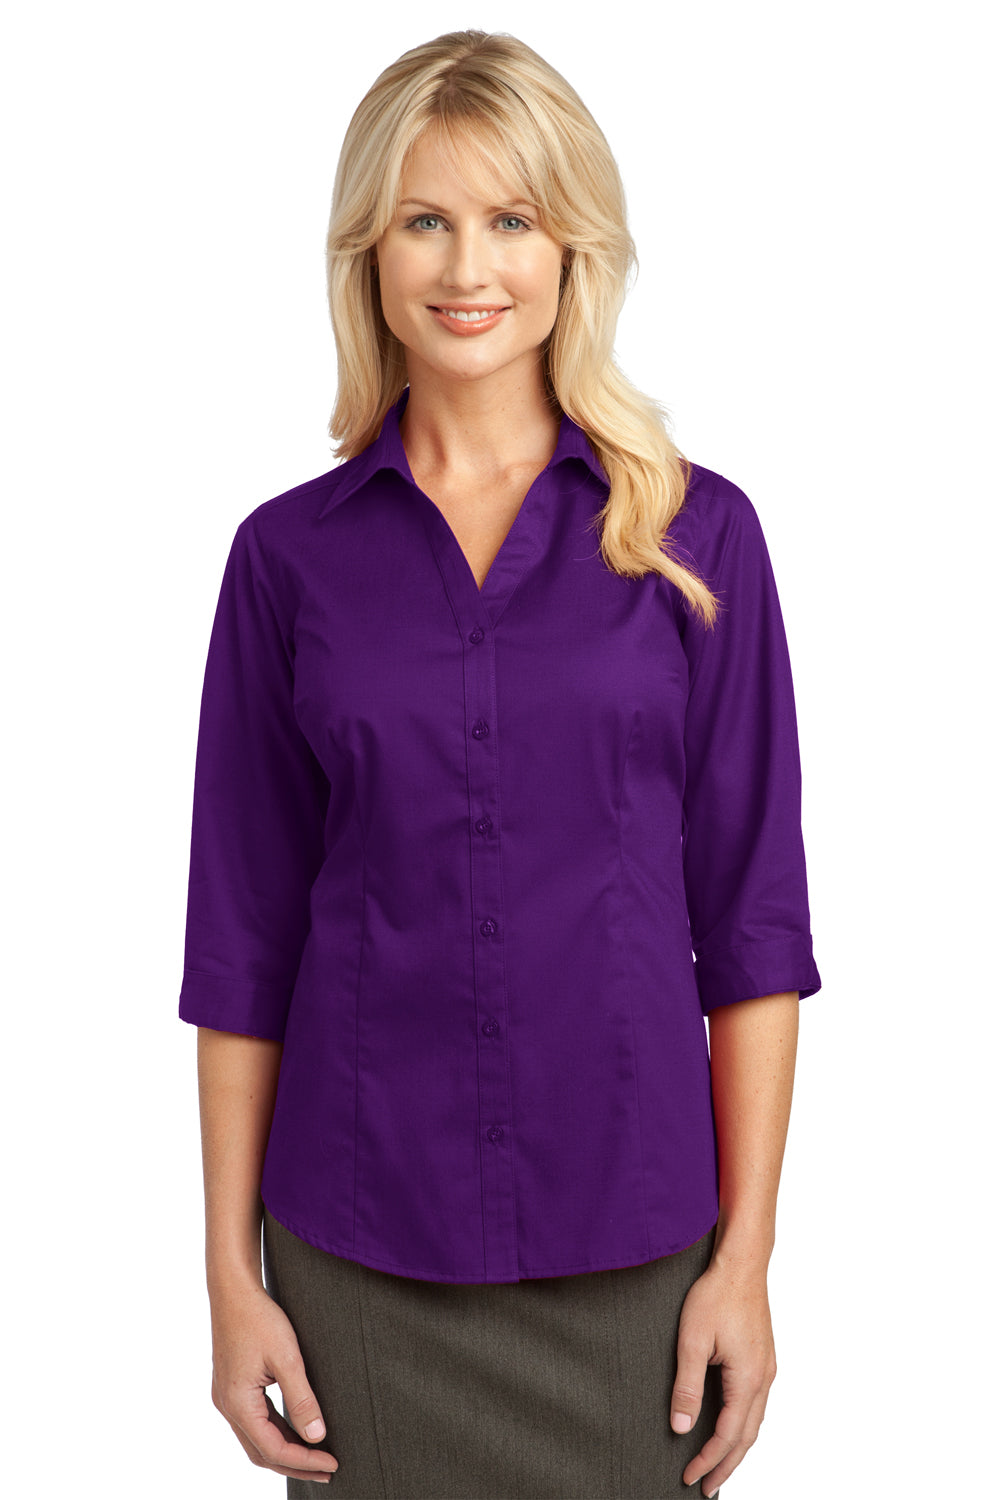 Authority L6290 Womens Wrinkle Resistant 3/4 Sleeve Button Shirt — BigTopShirtShop.com